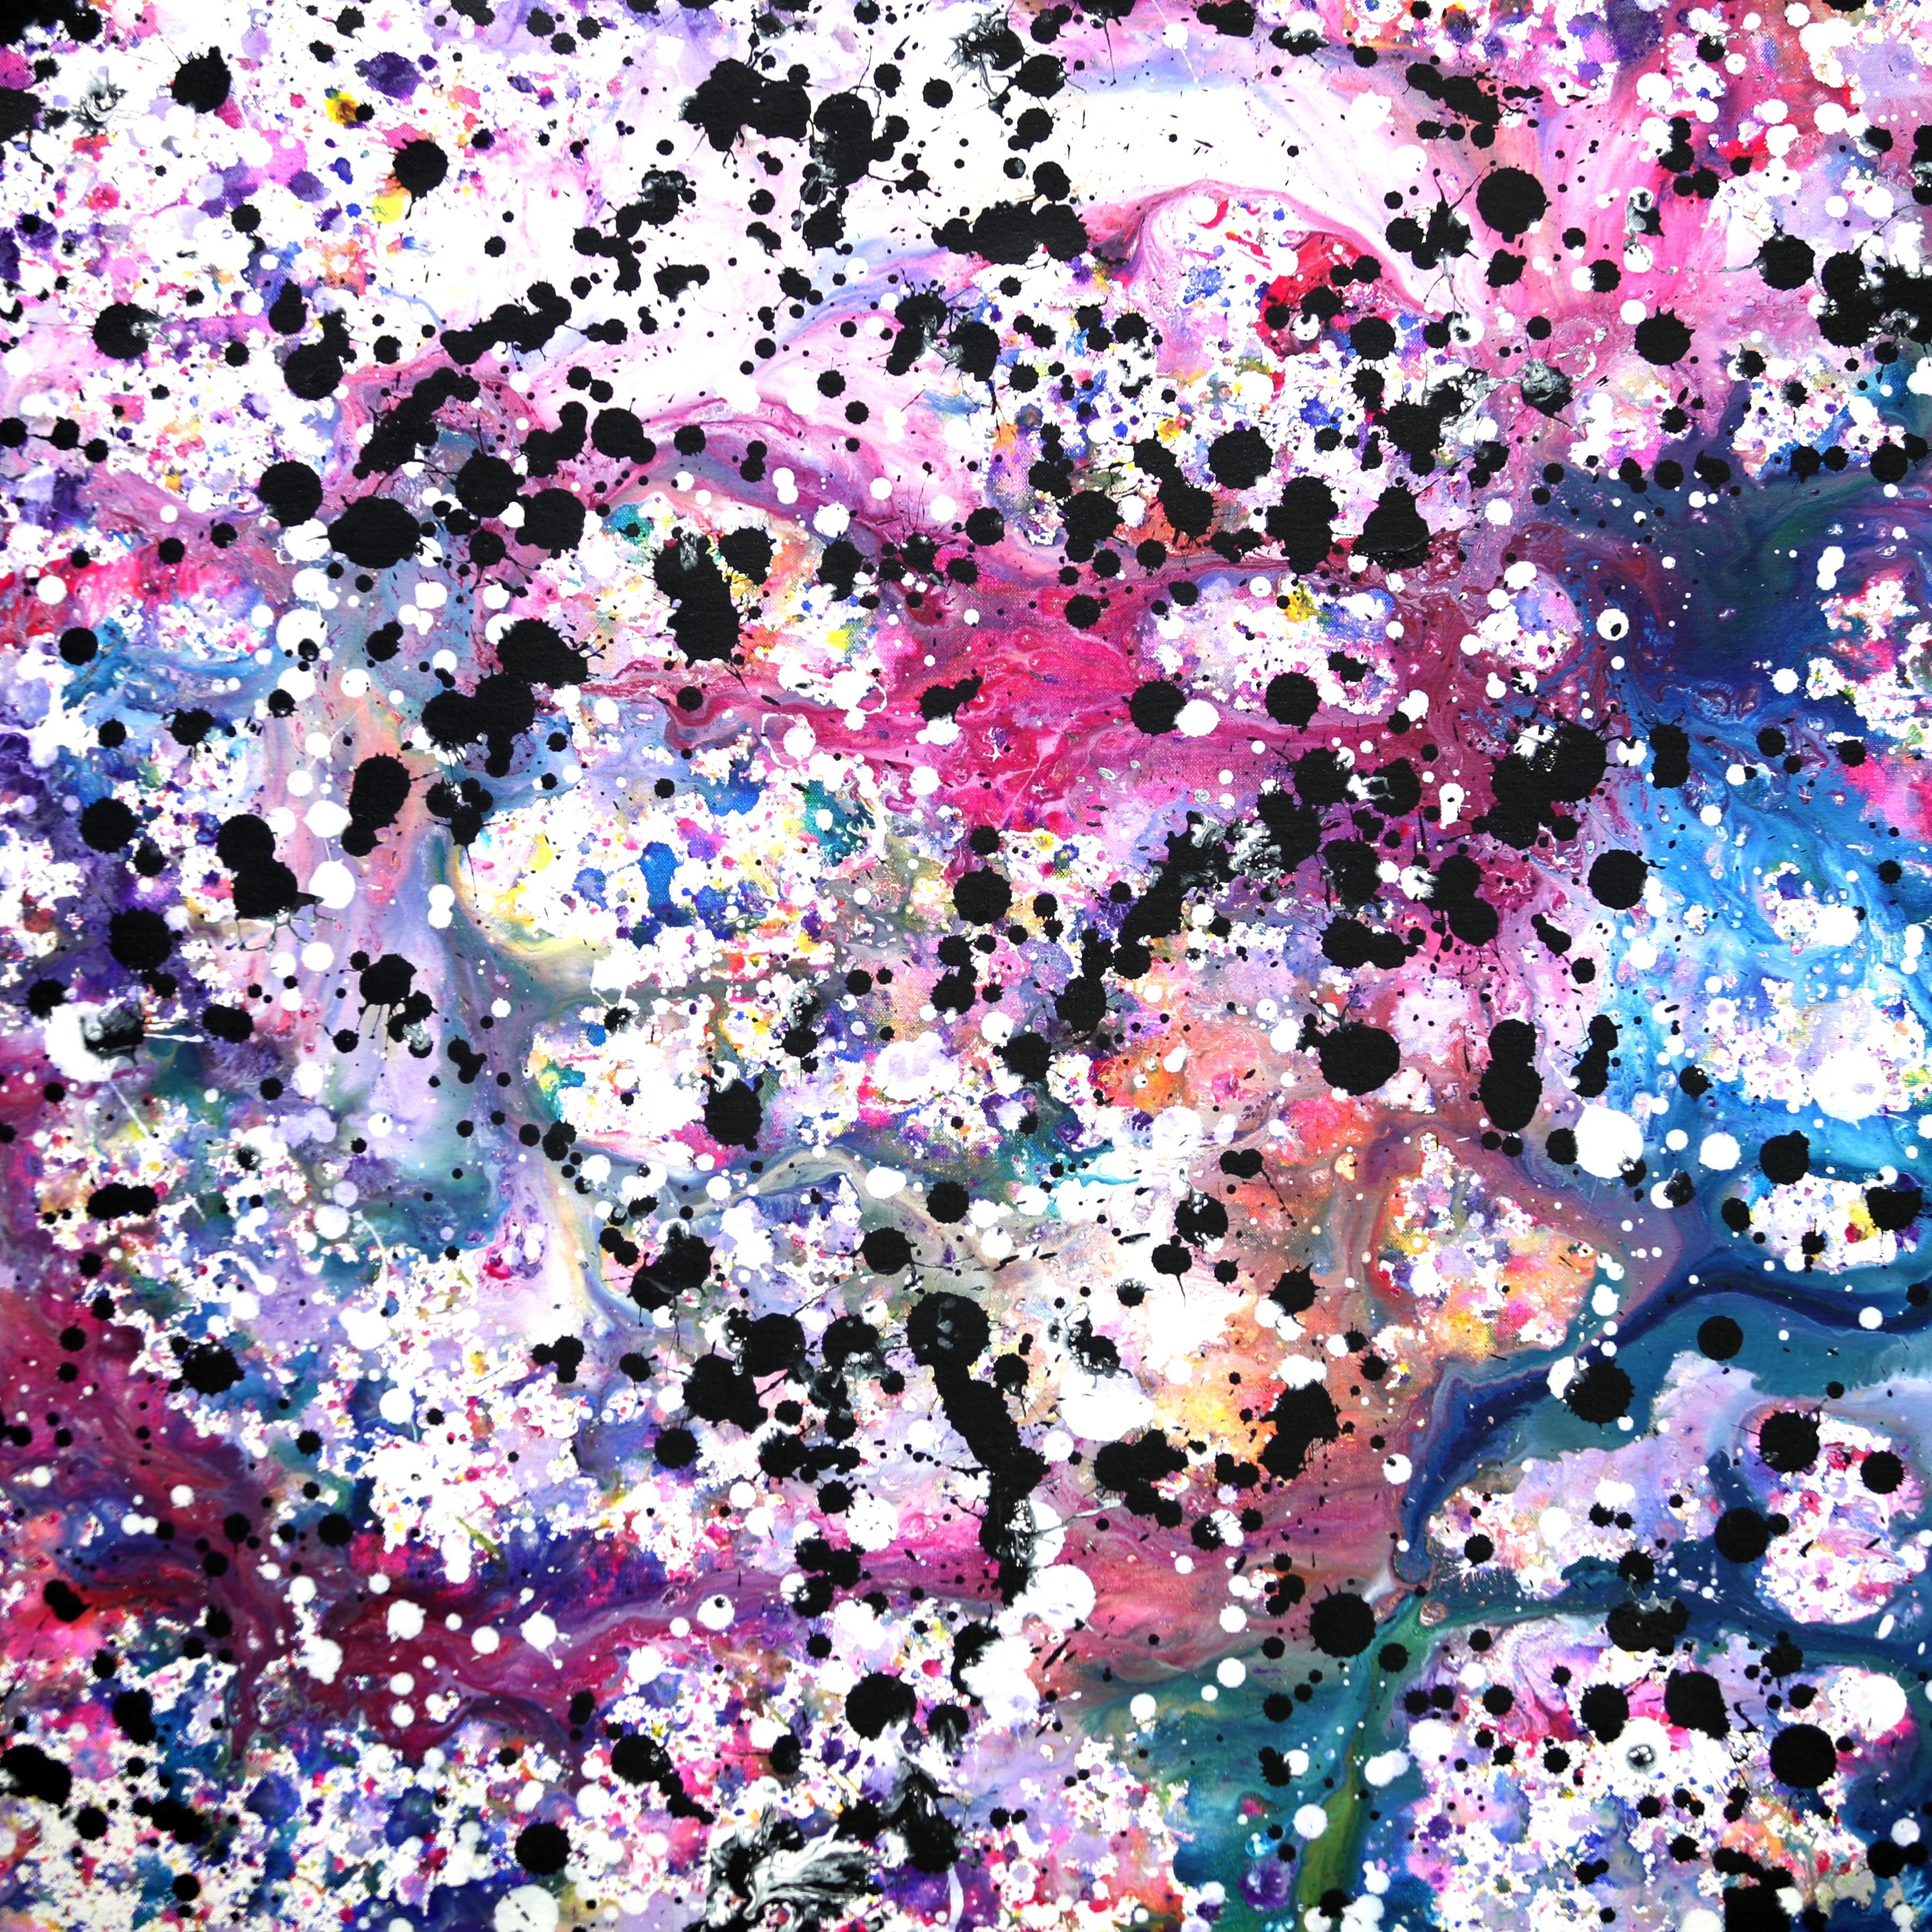 Cosmic Journey - Purple Interior Painting by Estelle Asmodelle